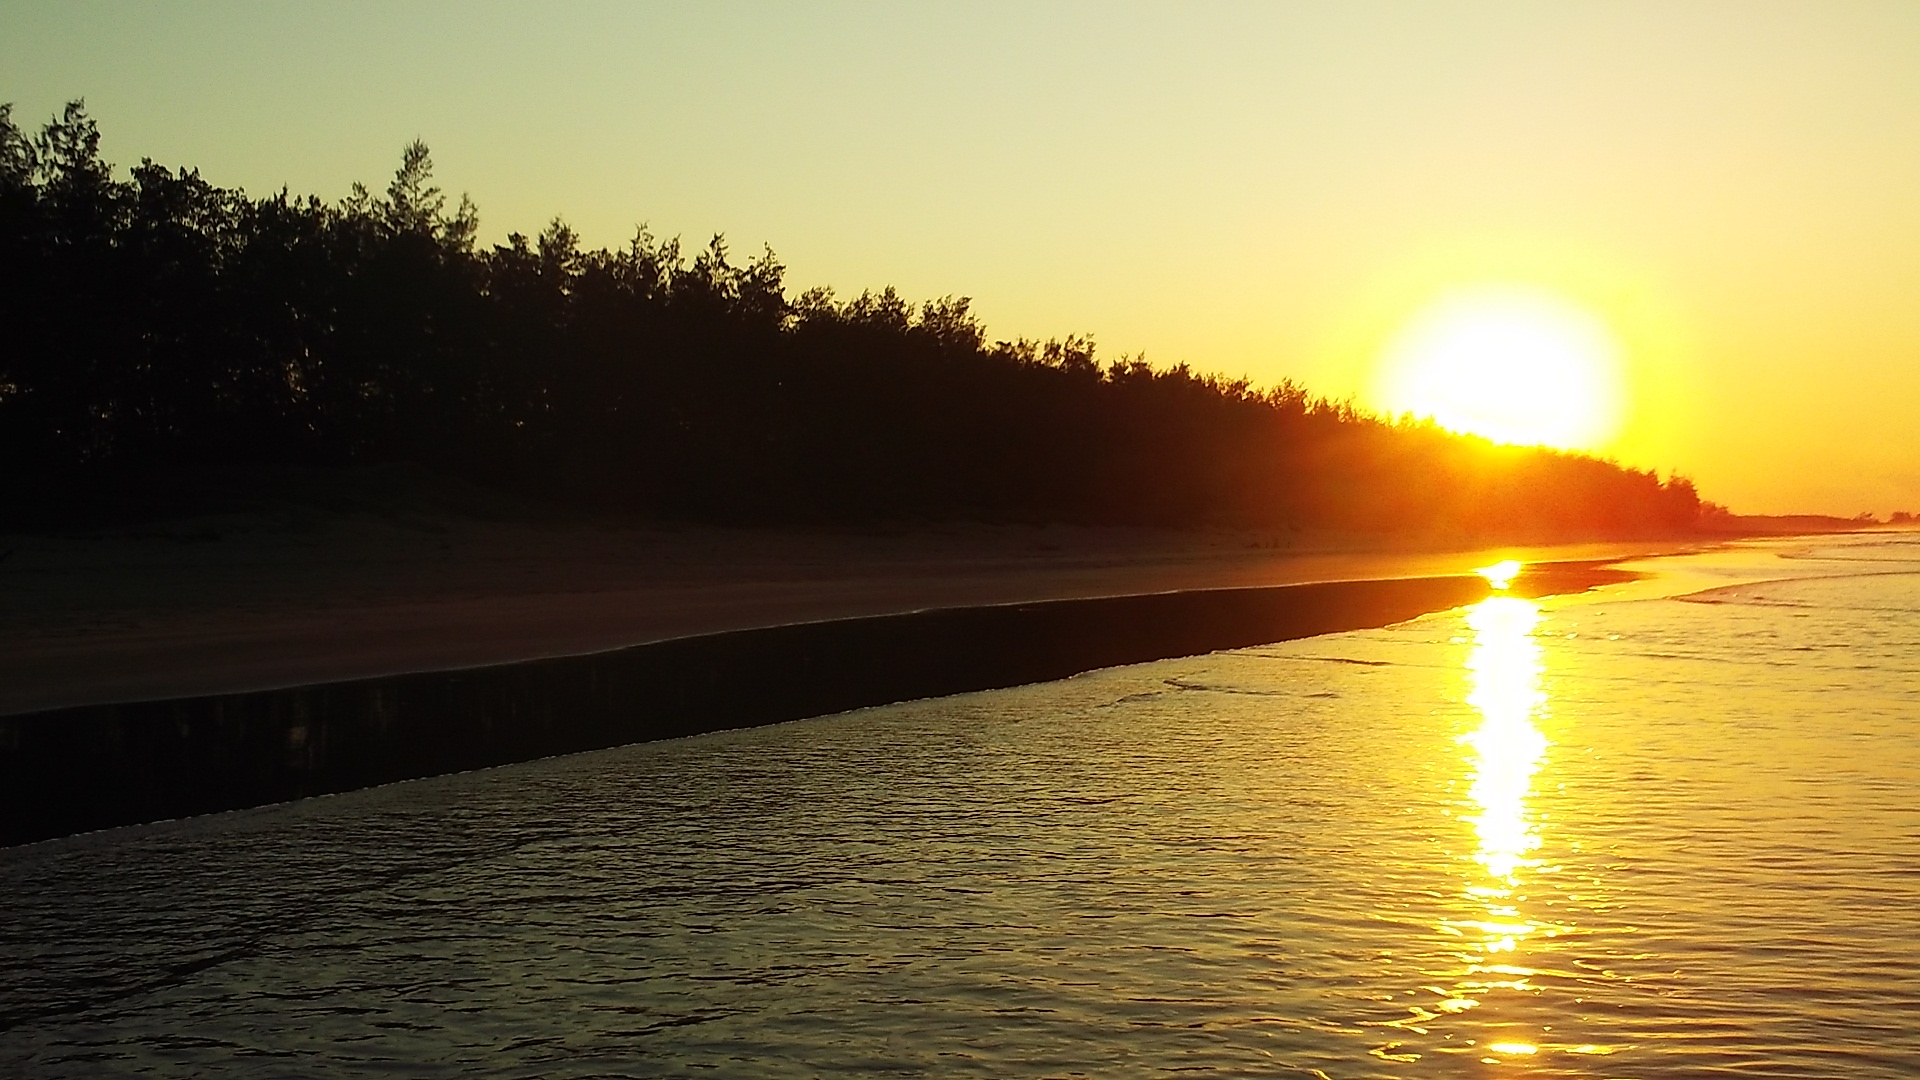 TWA pulau menipo selain dihuni oleh satwa yang dilindungi juga memiliki keindahan alam pantai yang indah untuk menikmati sunrise